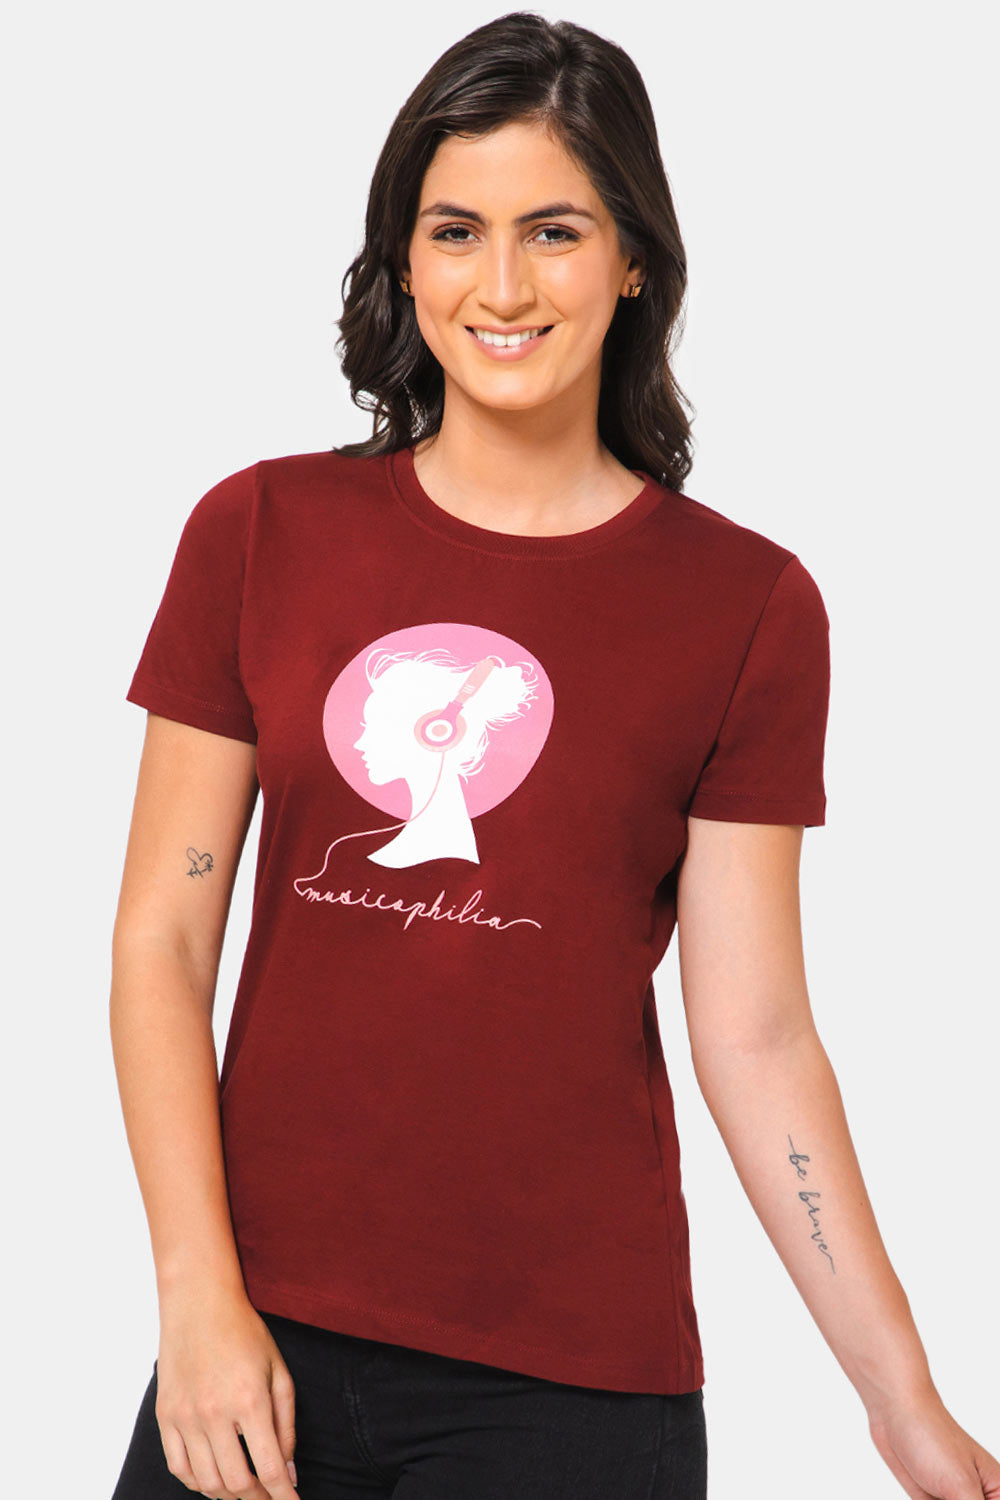 Jusperf Women Printed Cotton T-shirt - SN10 - Maroon